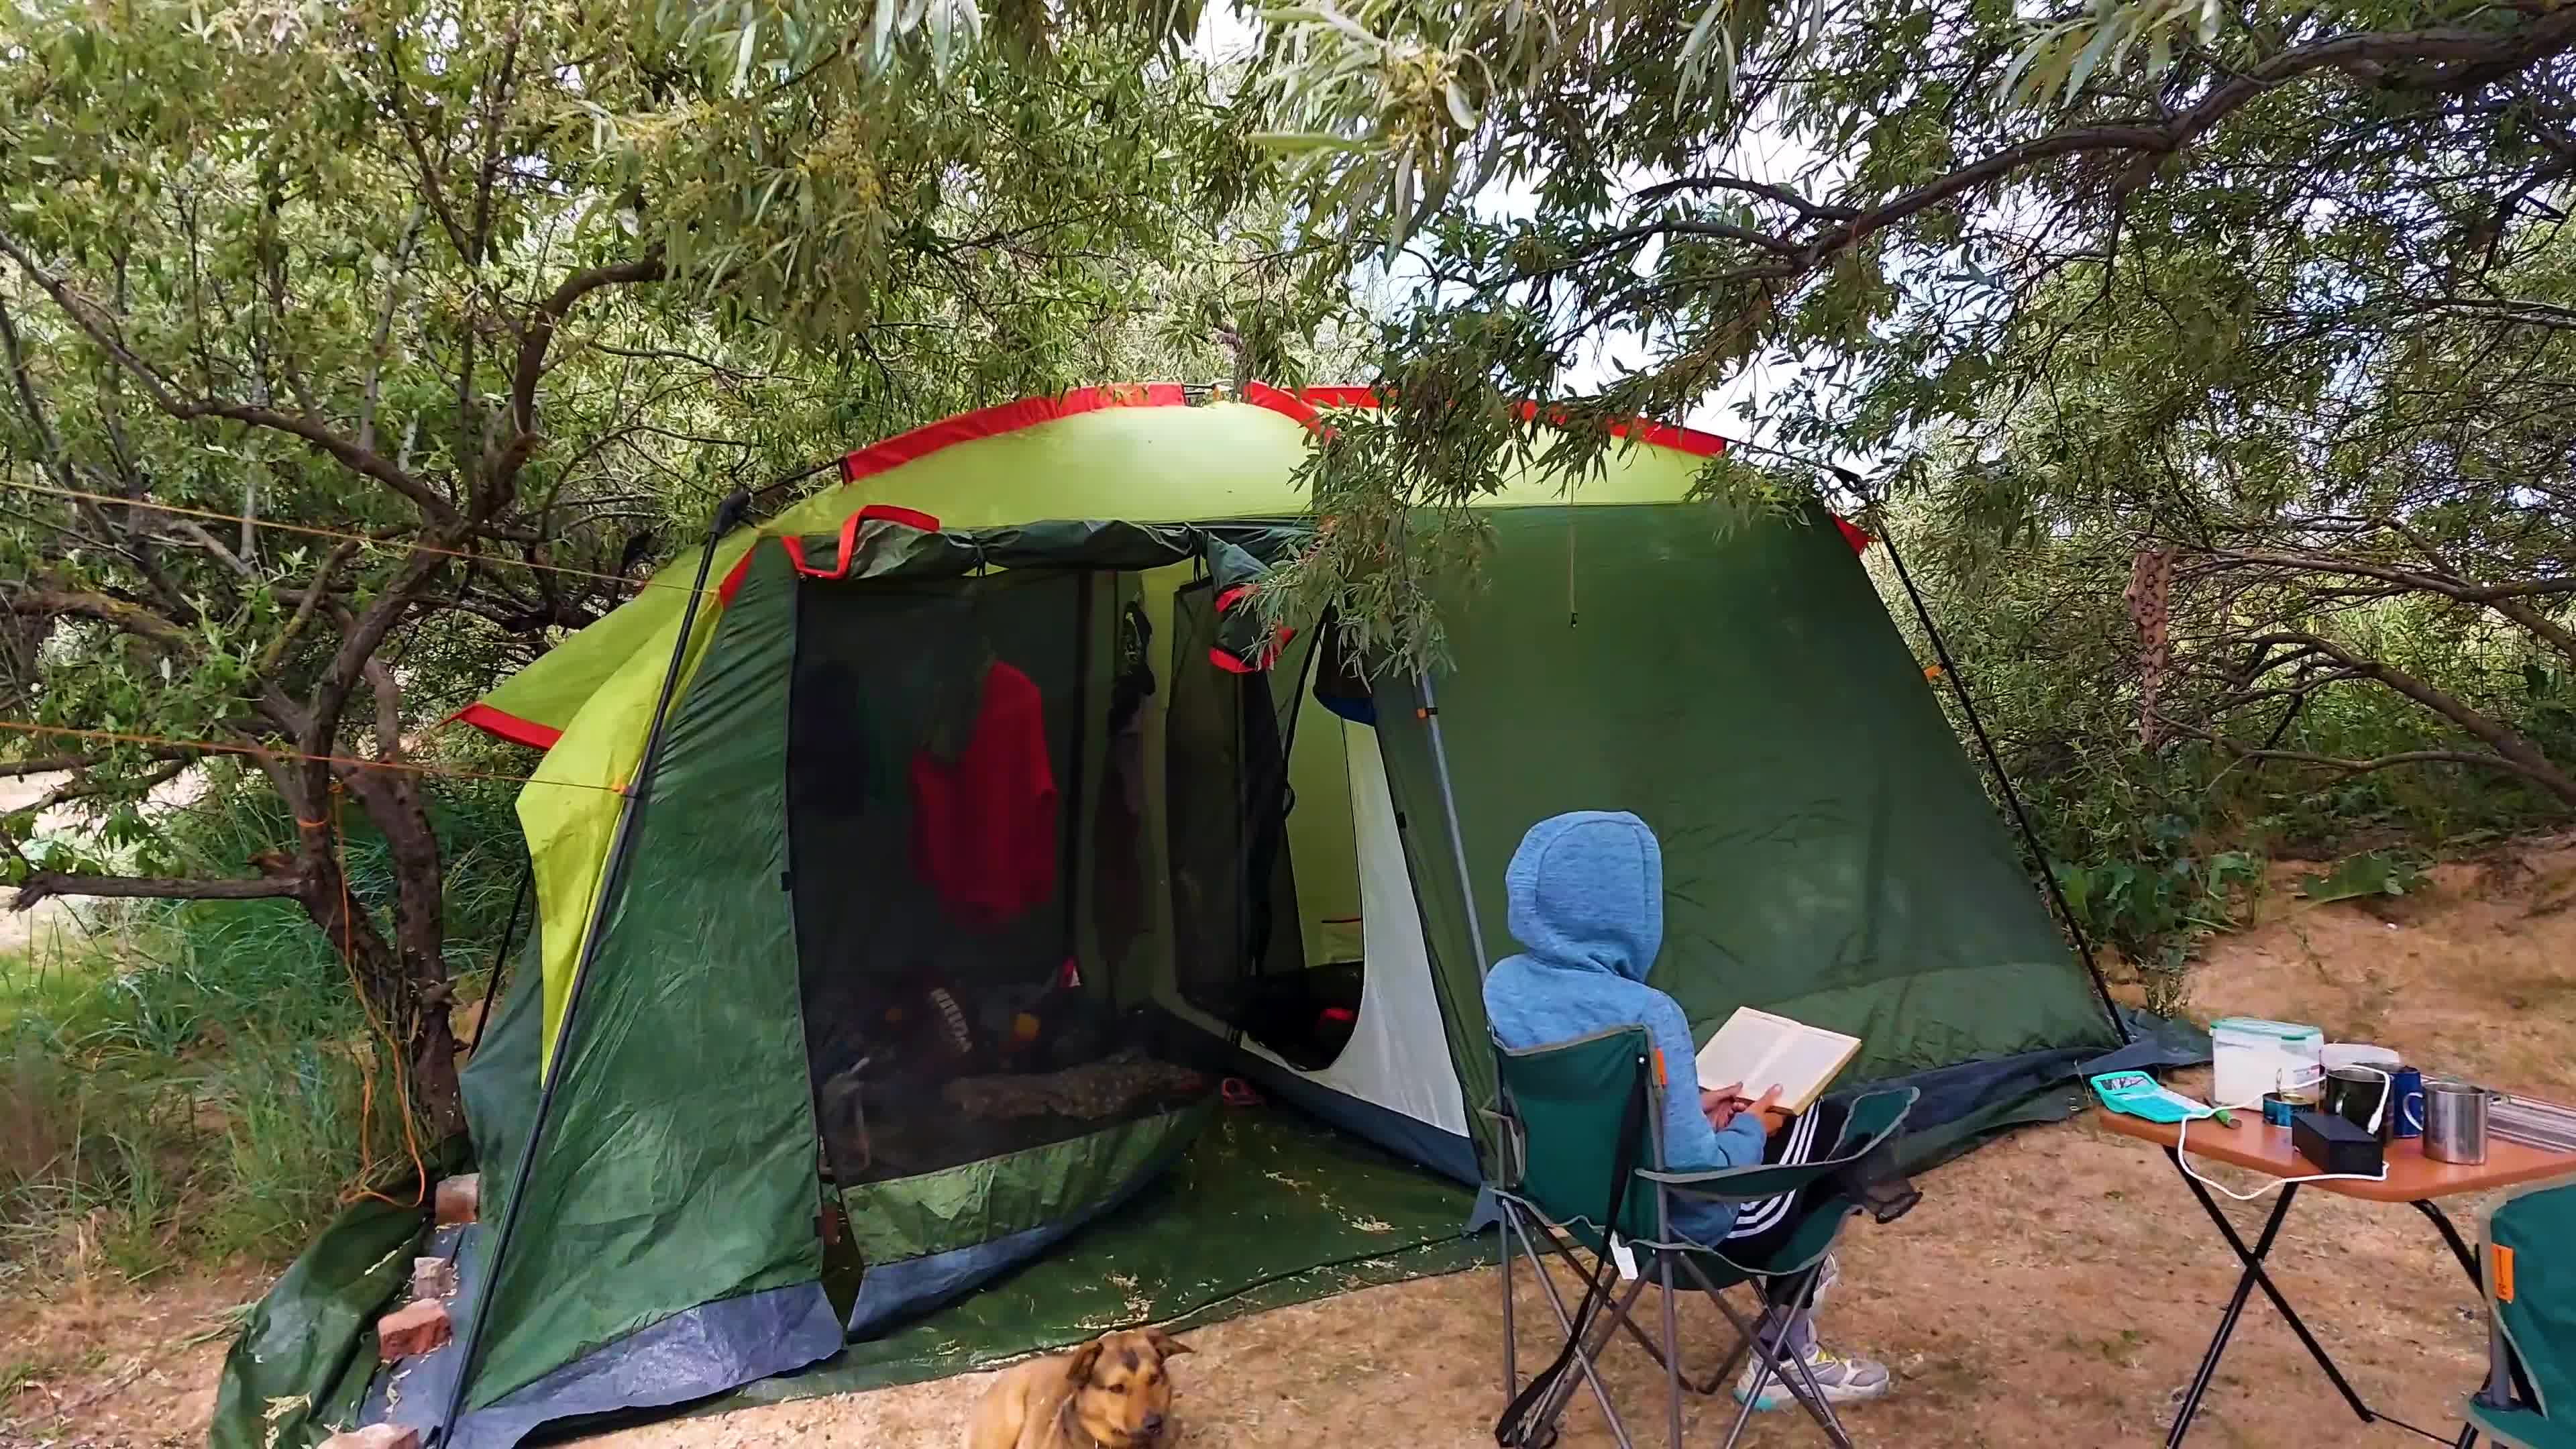 Mir camping палатка. Кемпинговая палатка mircamping 1900. Палатка mir Camping 2017. Палатка мир кемпинг 2018. Палатка мир кемпинг 2020.